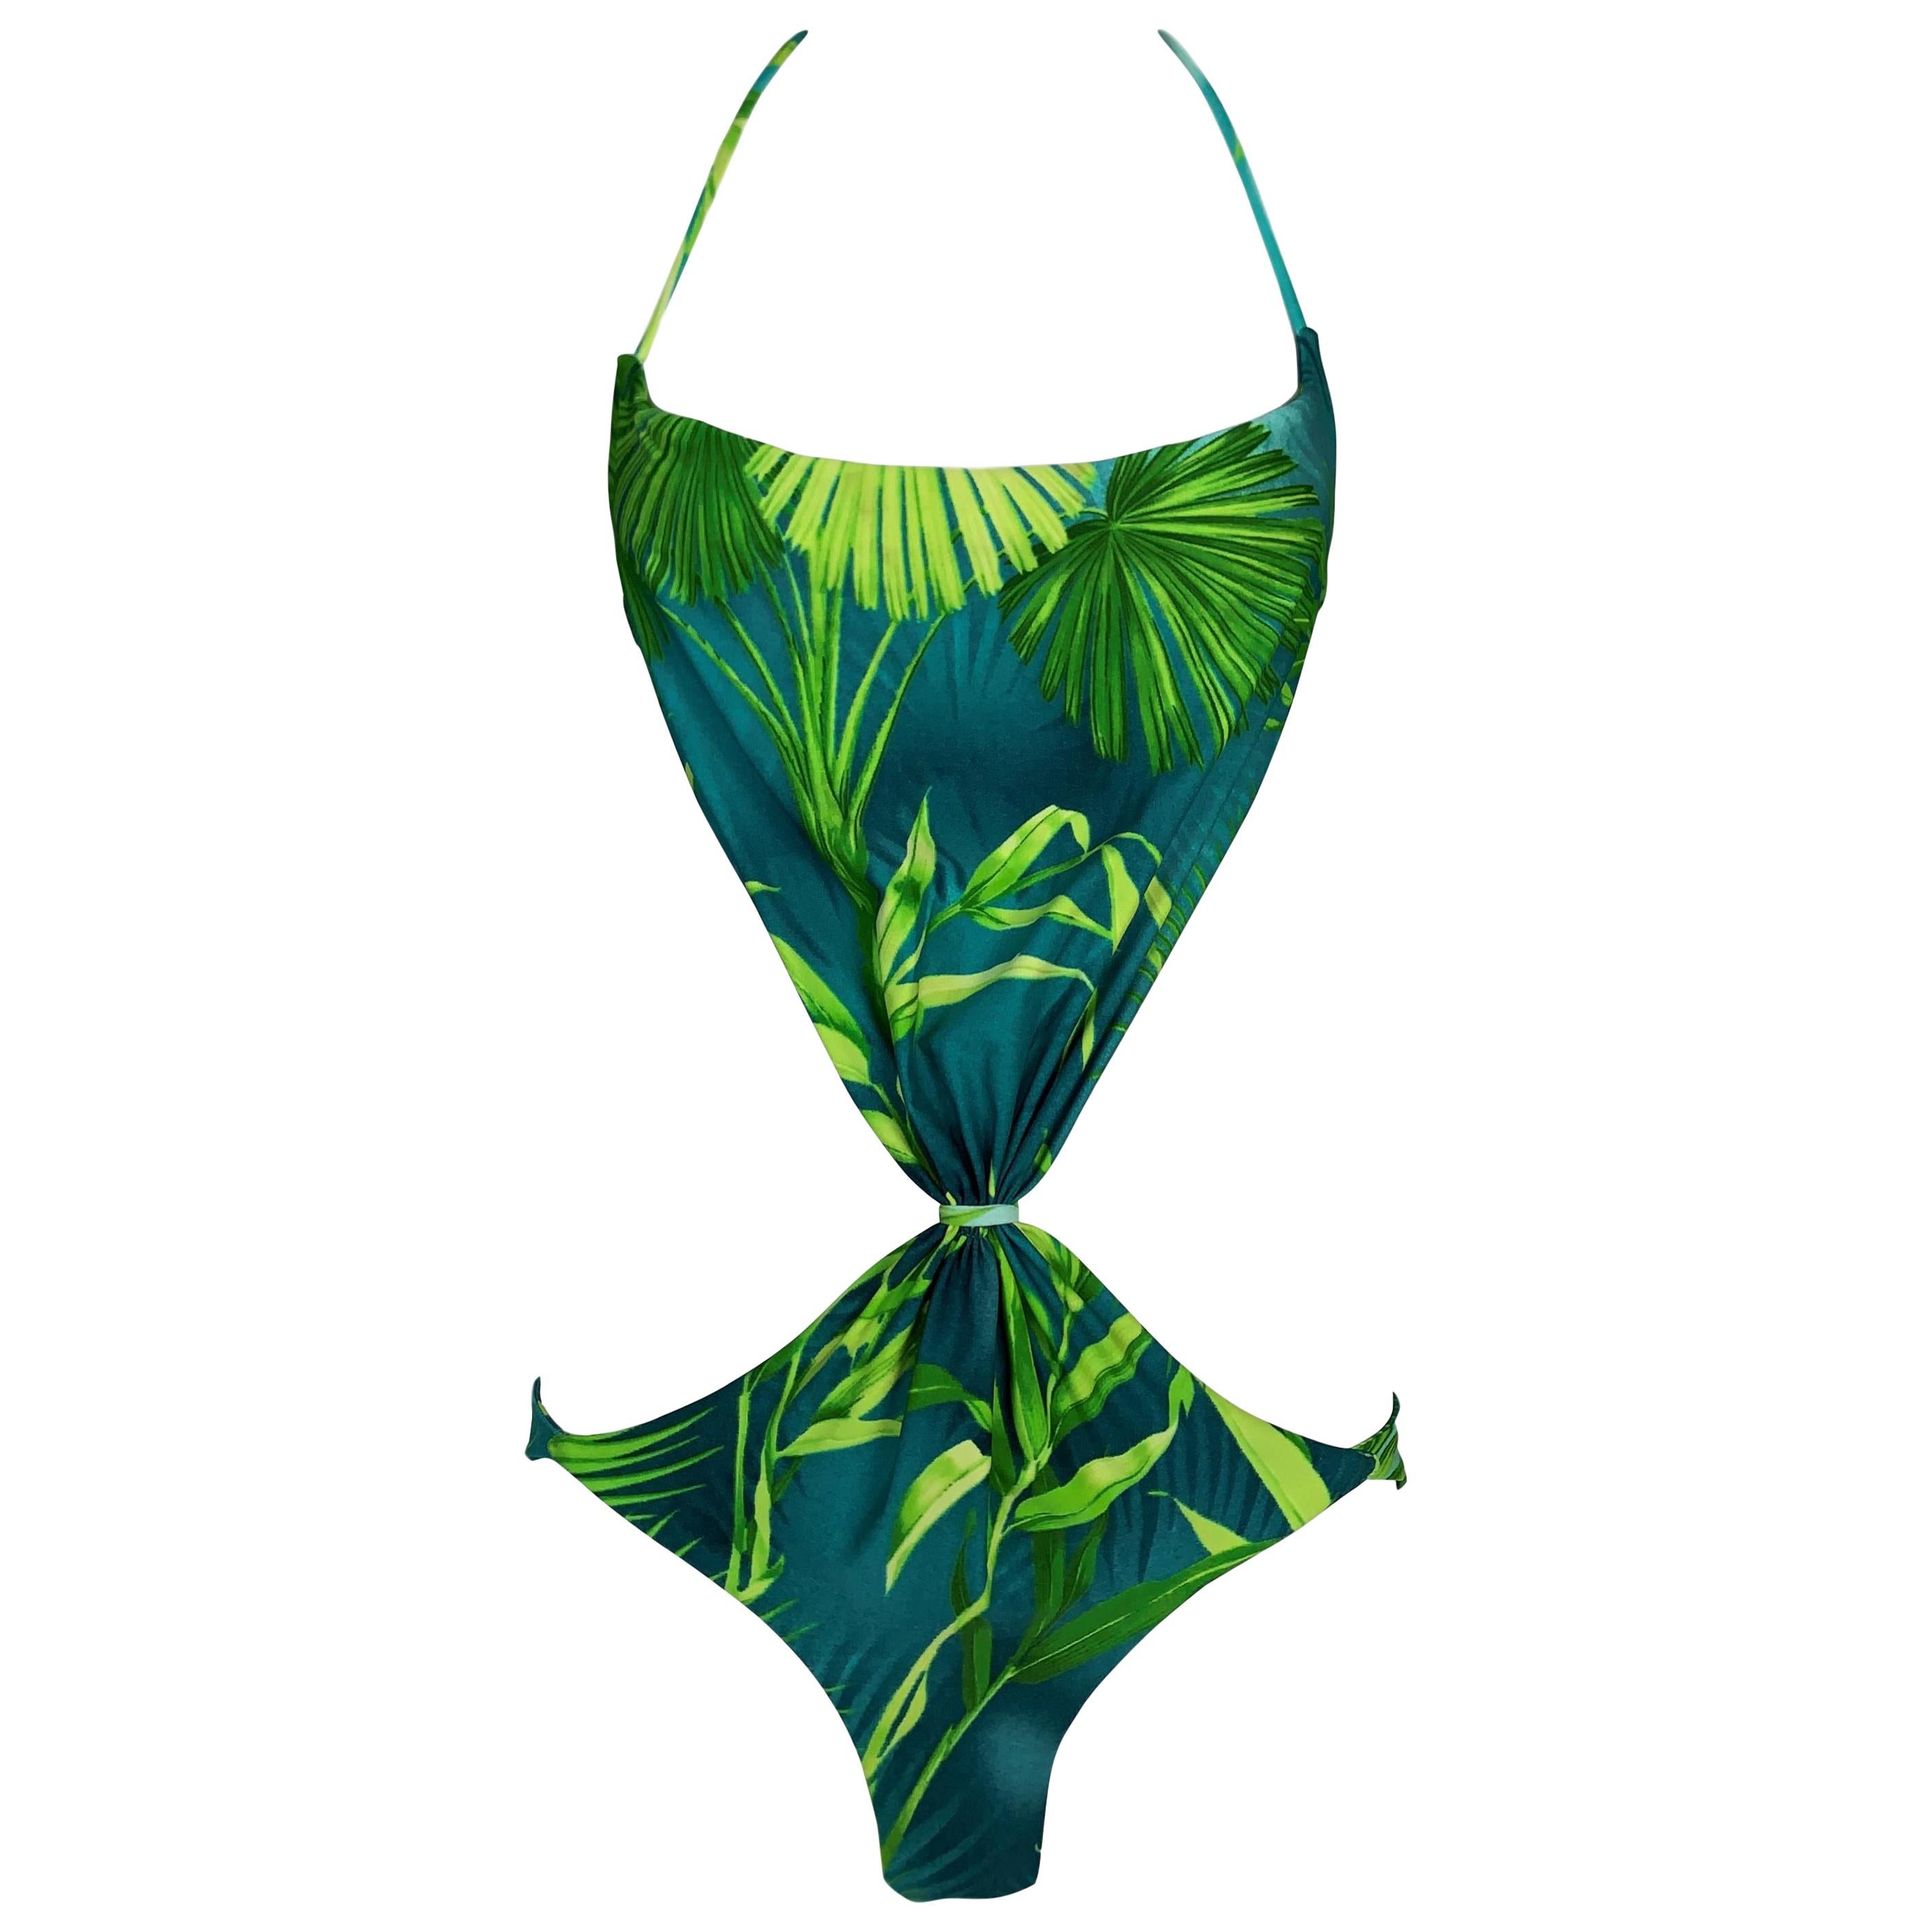 S/S 2000 Gianni Versace Runway Famous Tropical Palm Print Monokini Swimsuit